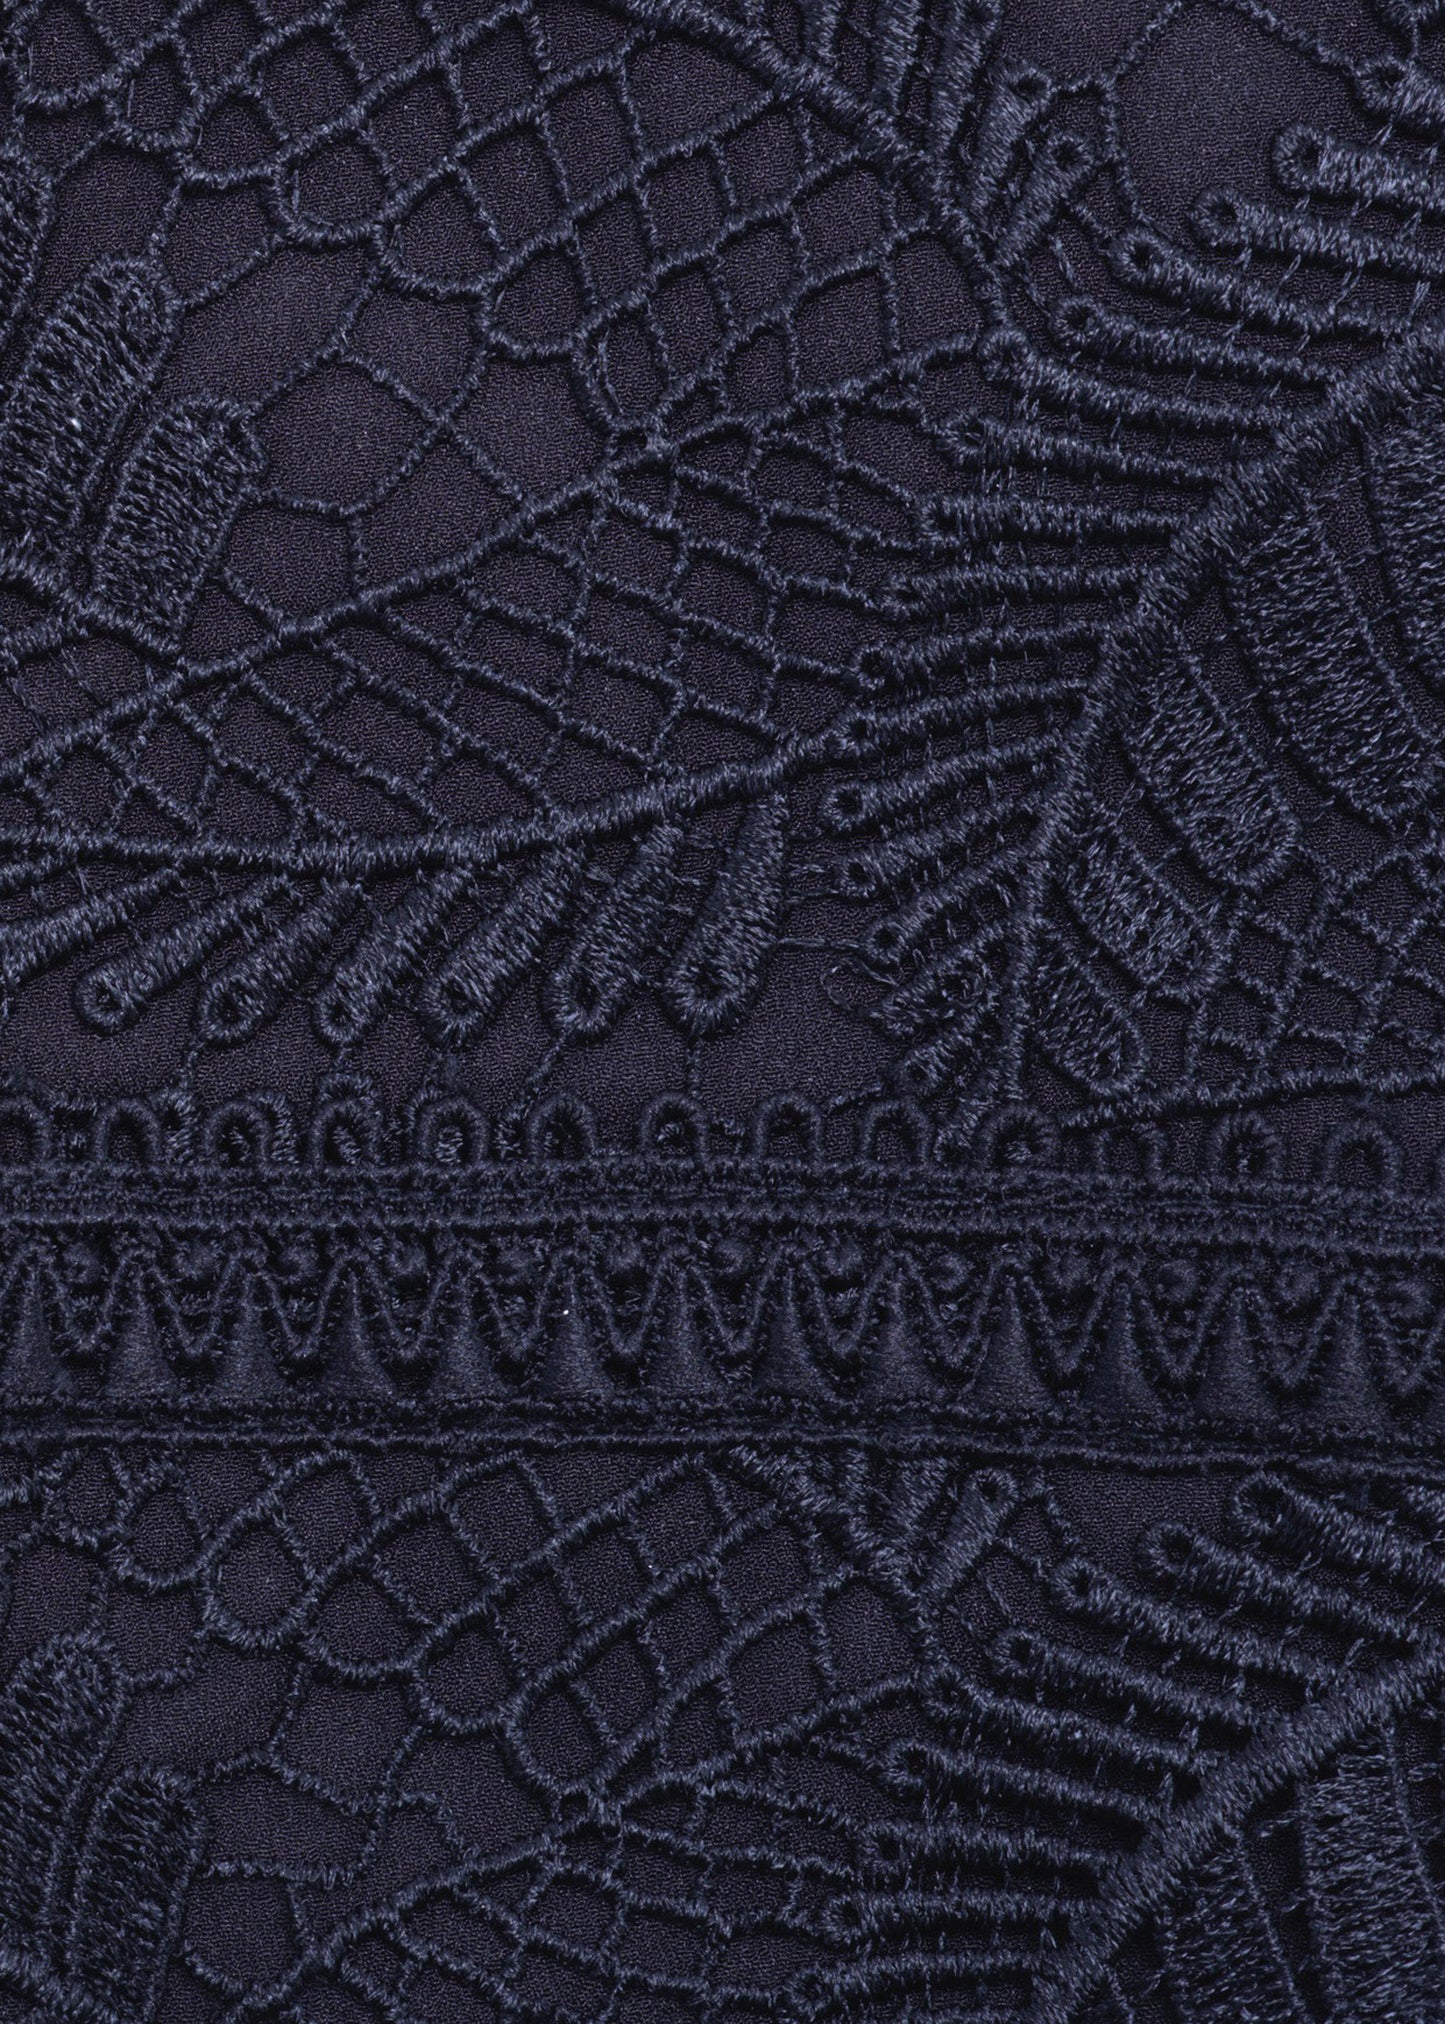 BEFORE Lace Black Corset